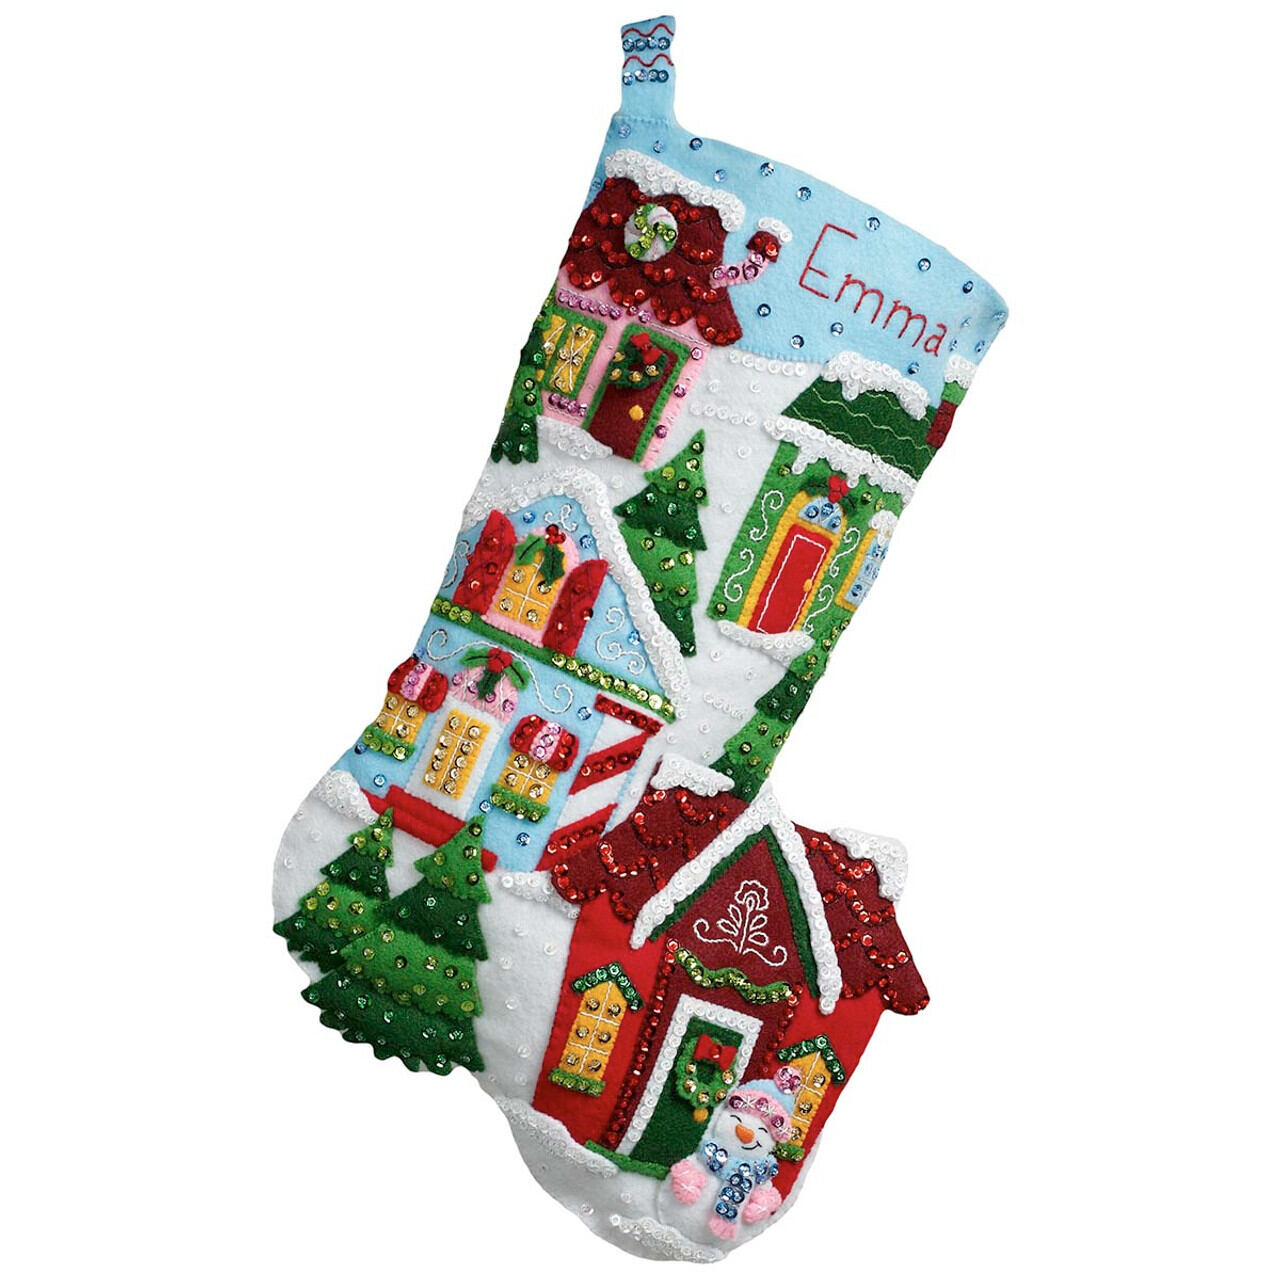 Candy Express Felt Christmas Stocking Kit - Bucilla Felt Stockings